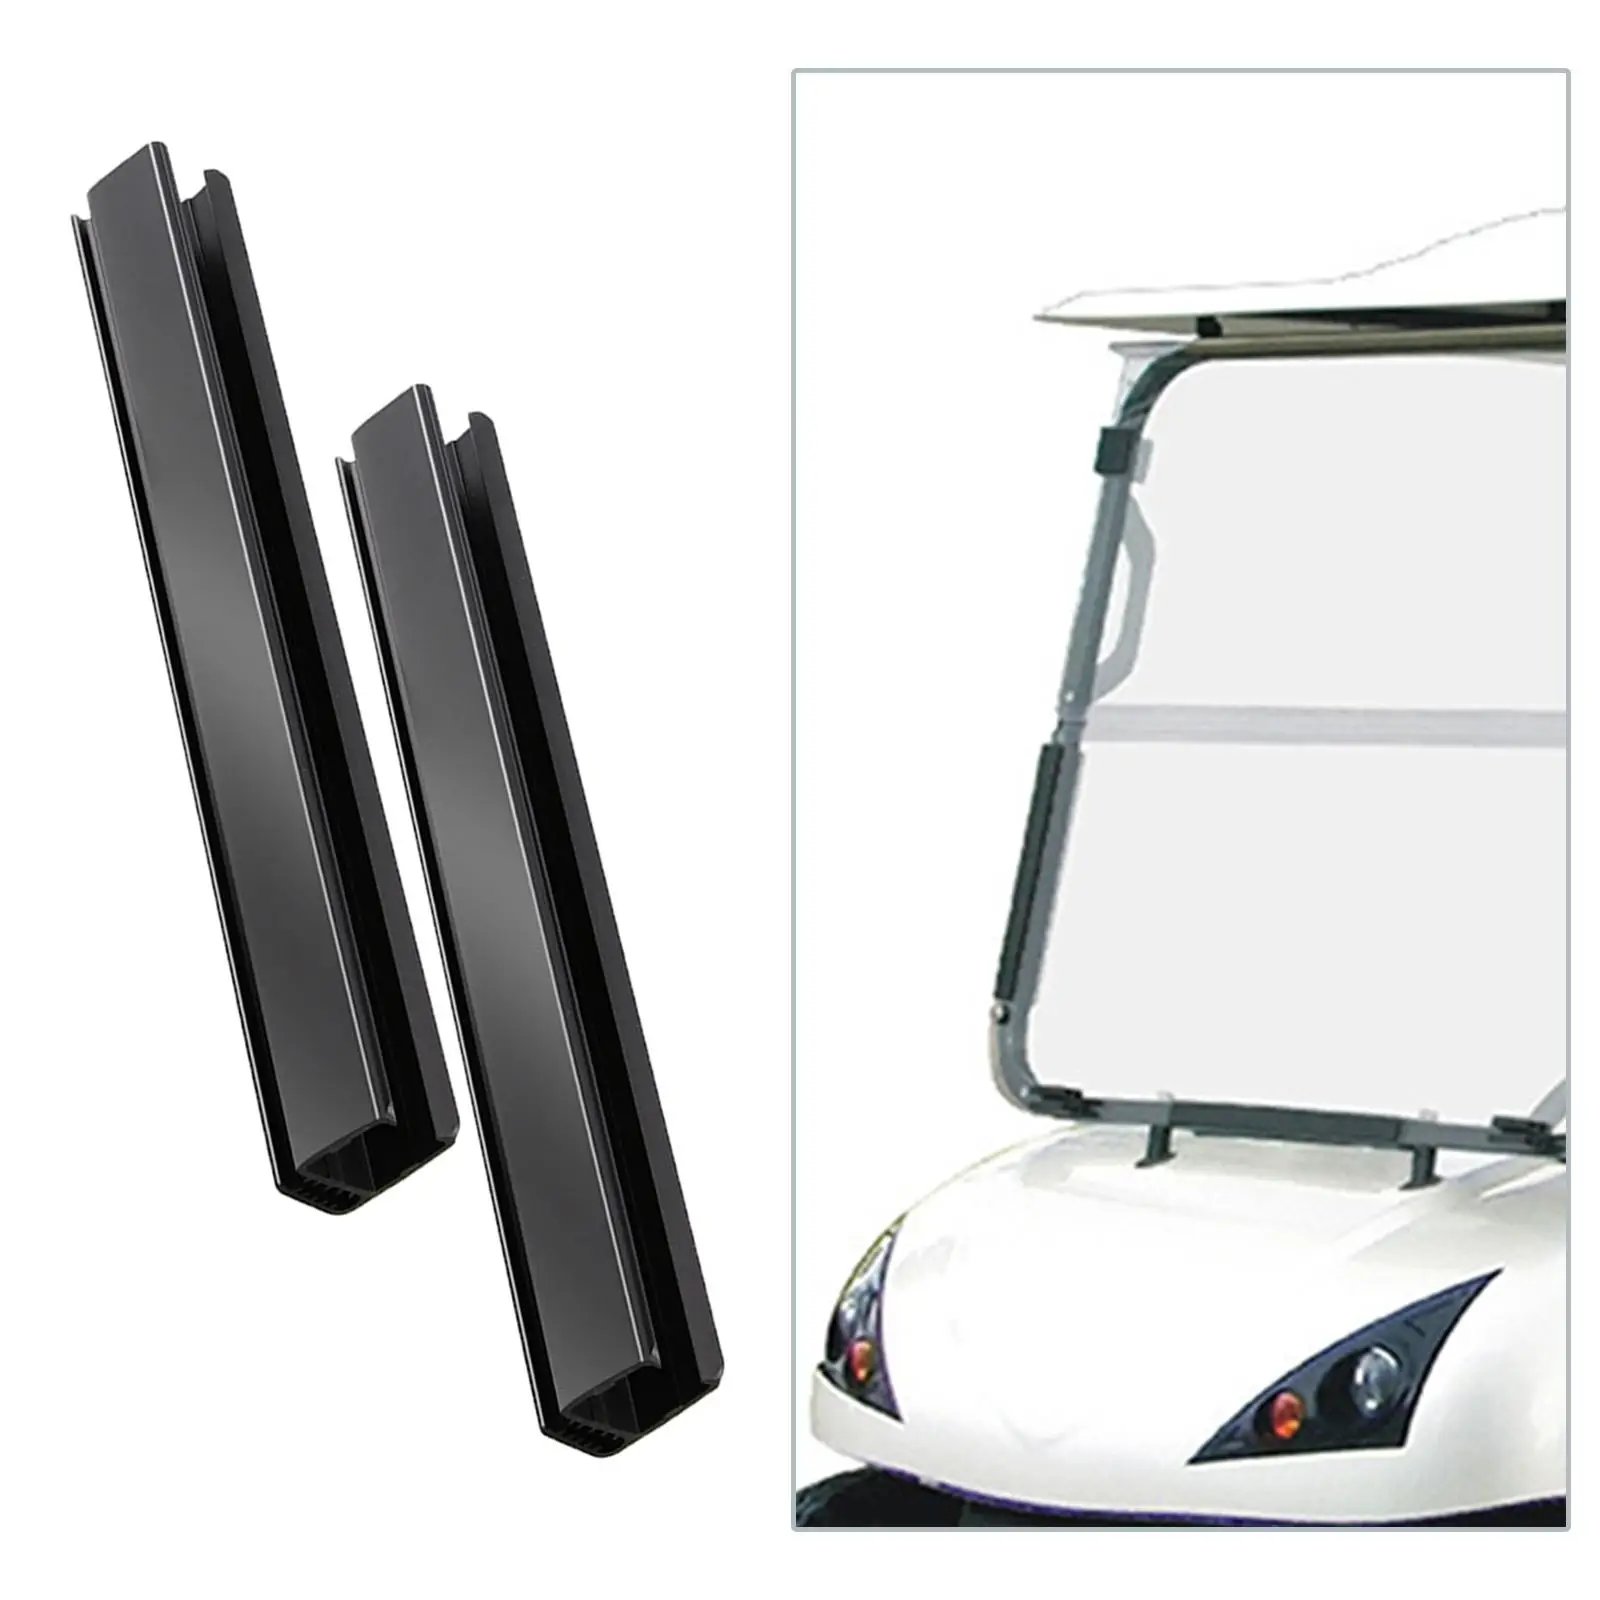 2x 32 cm Golf Cart Windshield Sash Clips 1021630-01 Plastic for Precedent Holder Black Club Car Accessories Hardware Body Kit